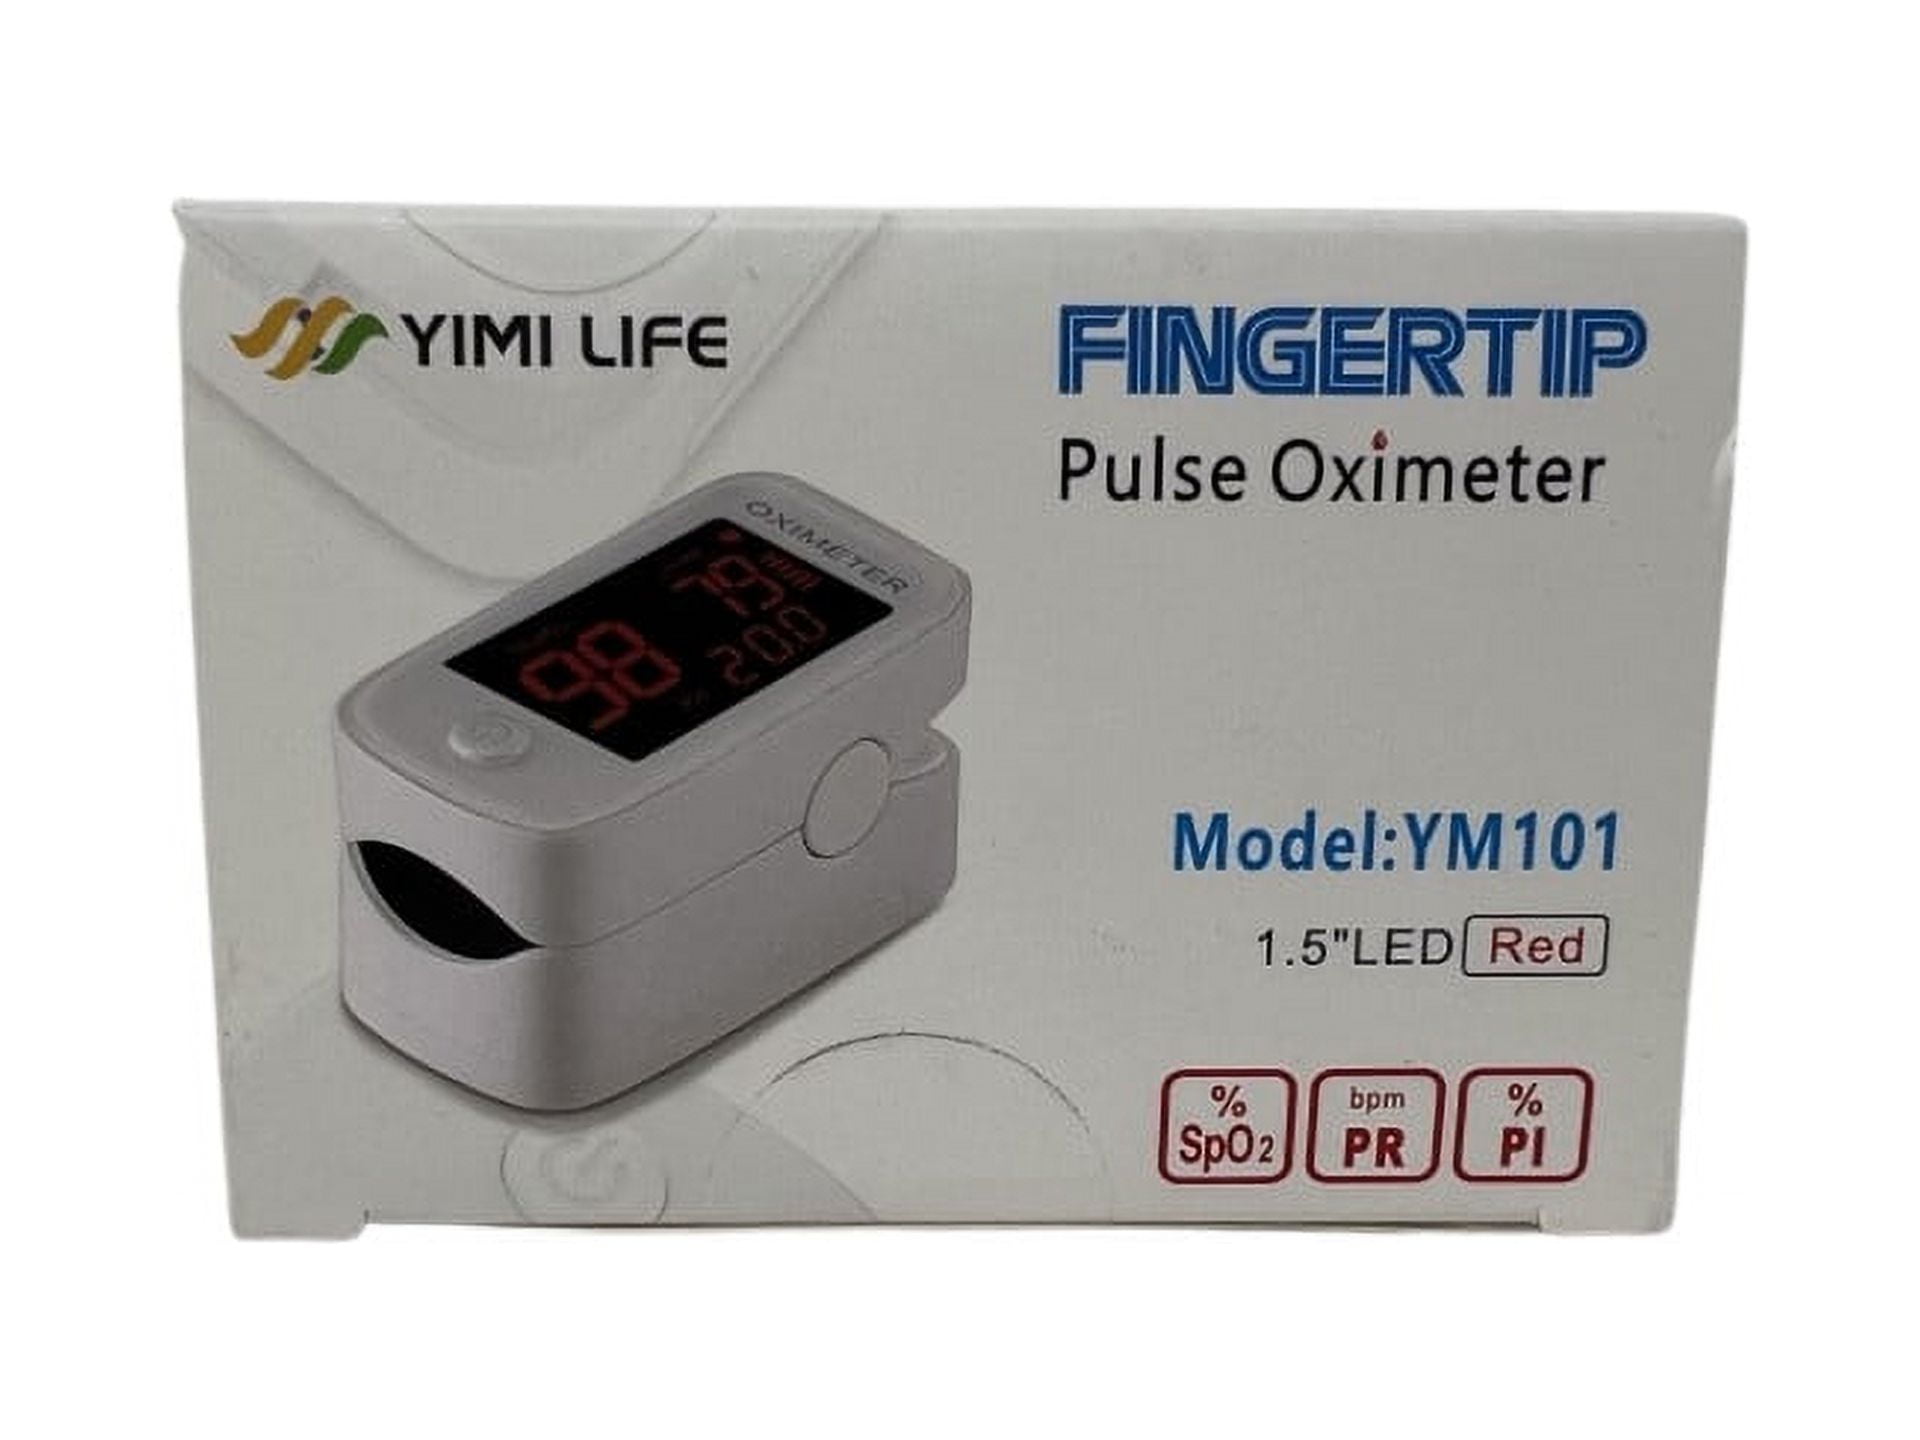 Pulsoxímetro Yimi Life Fingertip YM101: Medidor de Oxígeno en Sangre.